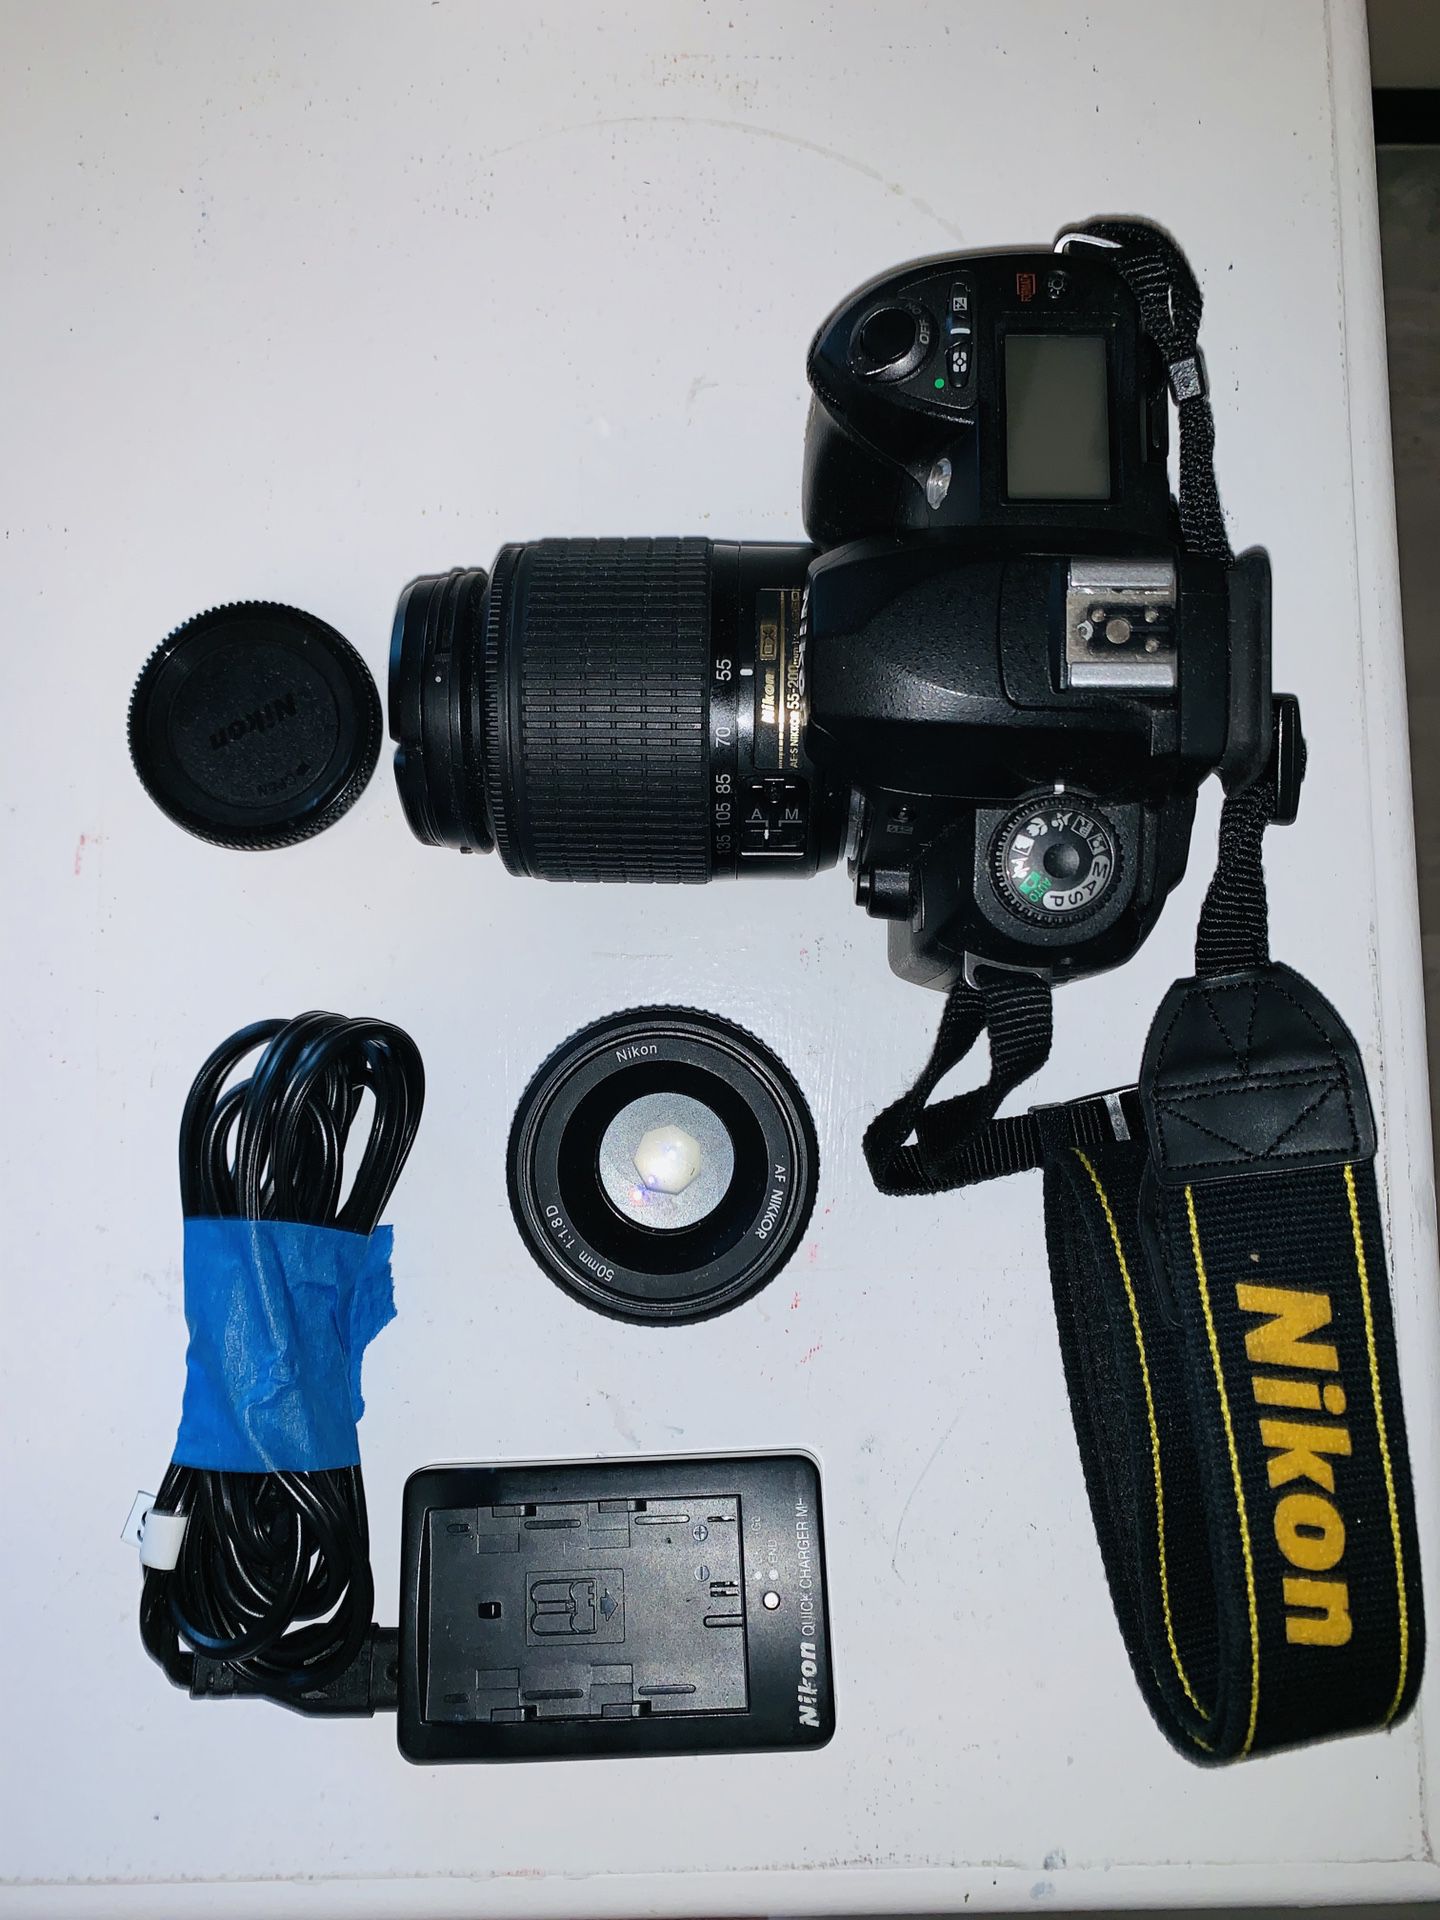 Nikon d70s dslr with two lenses